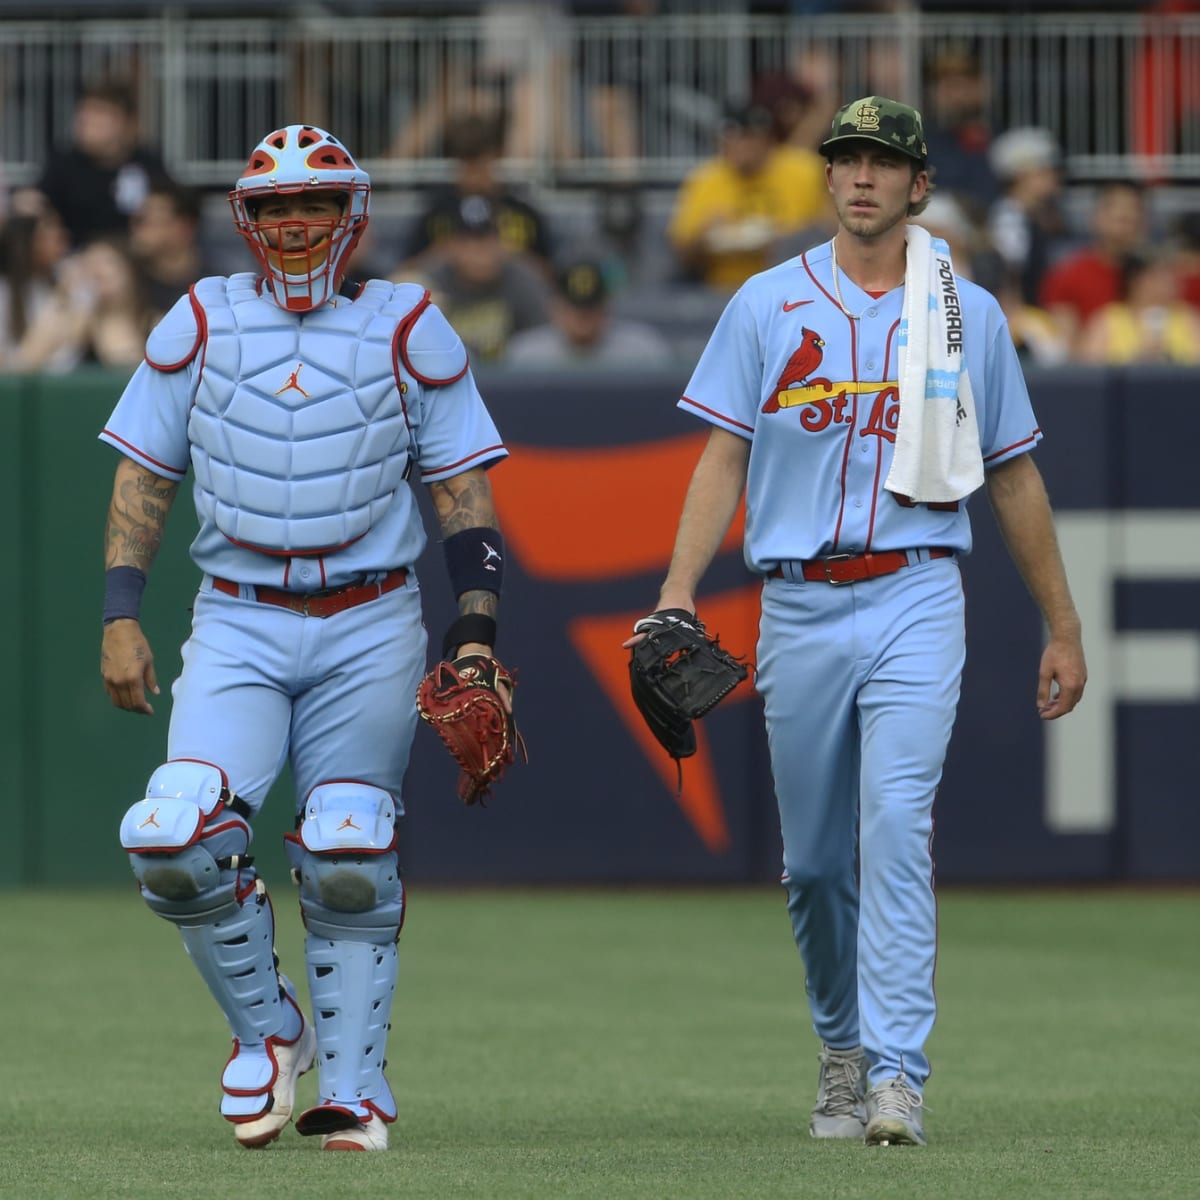 Cardinals' Yadier Molina Has First Career MLB Pitching Appearance